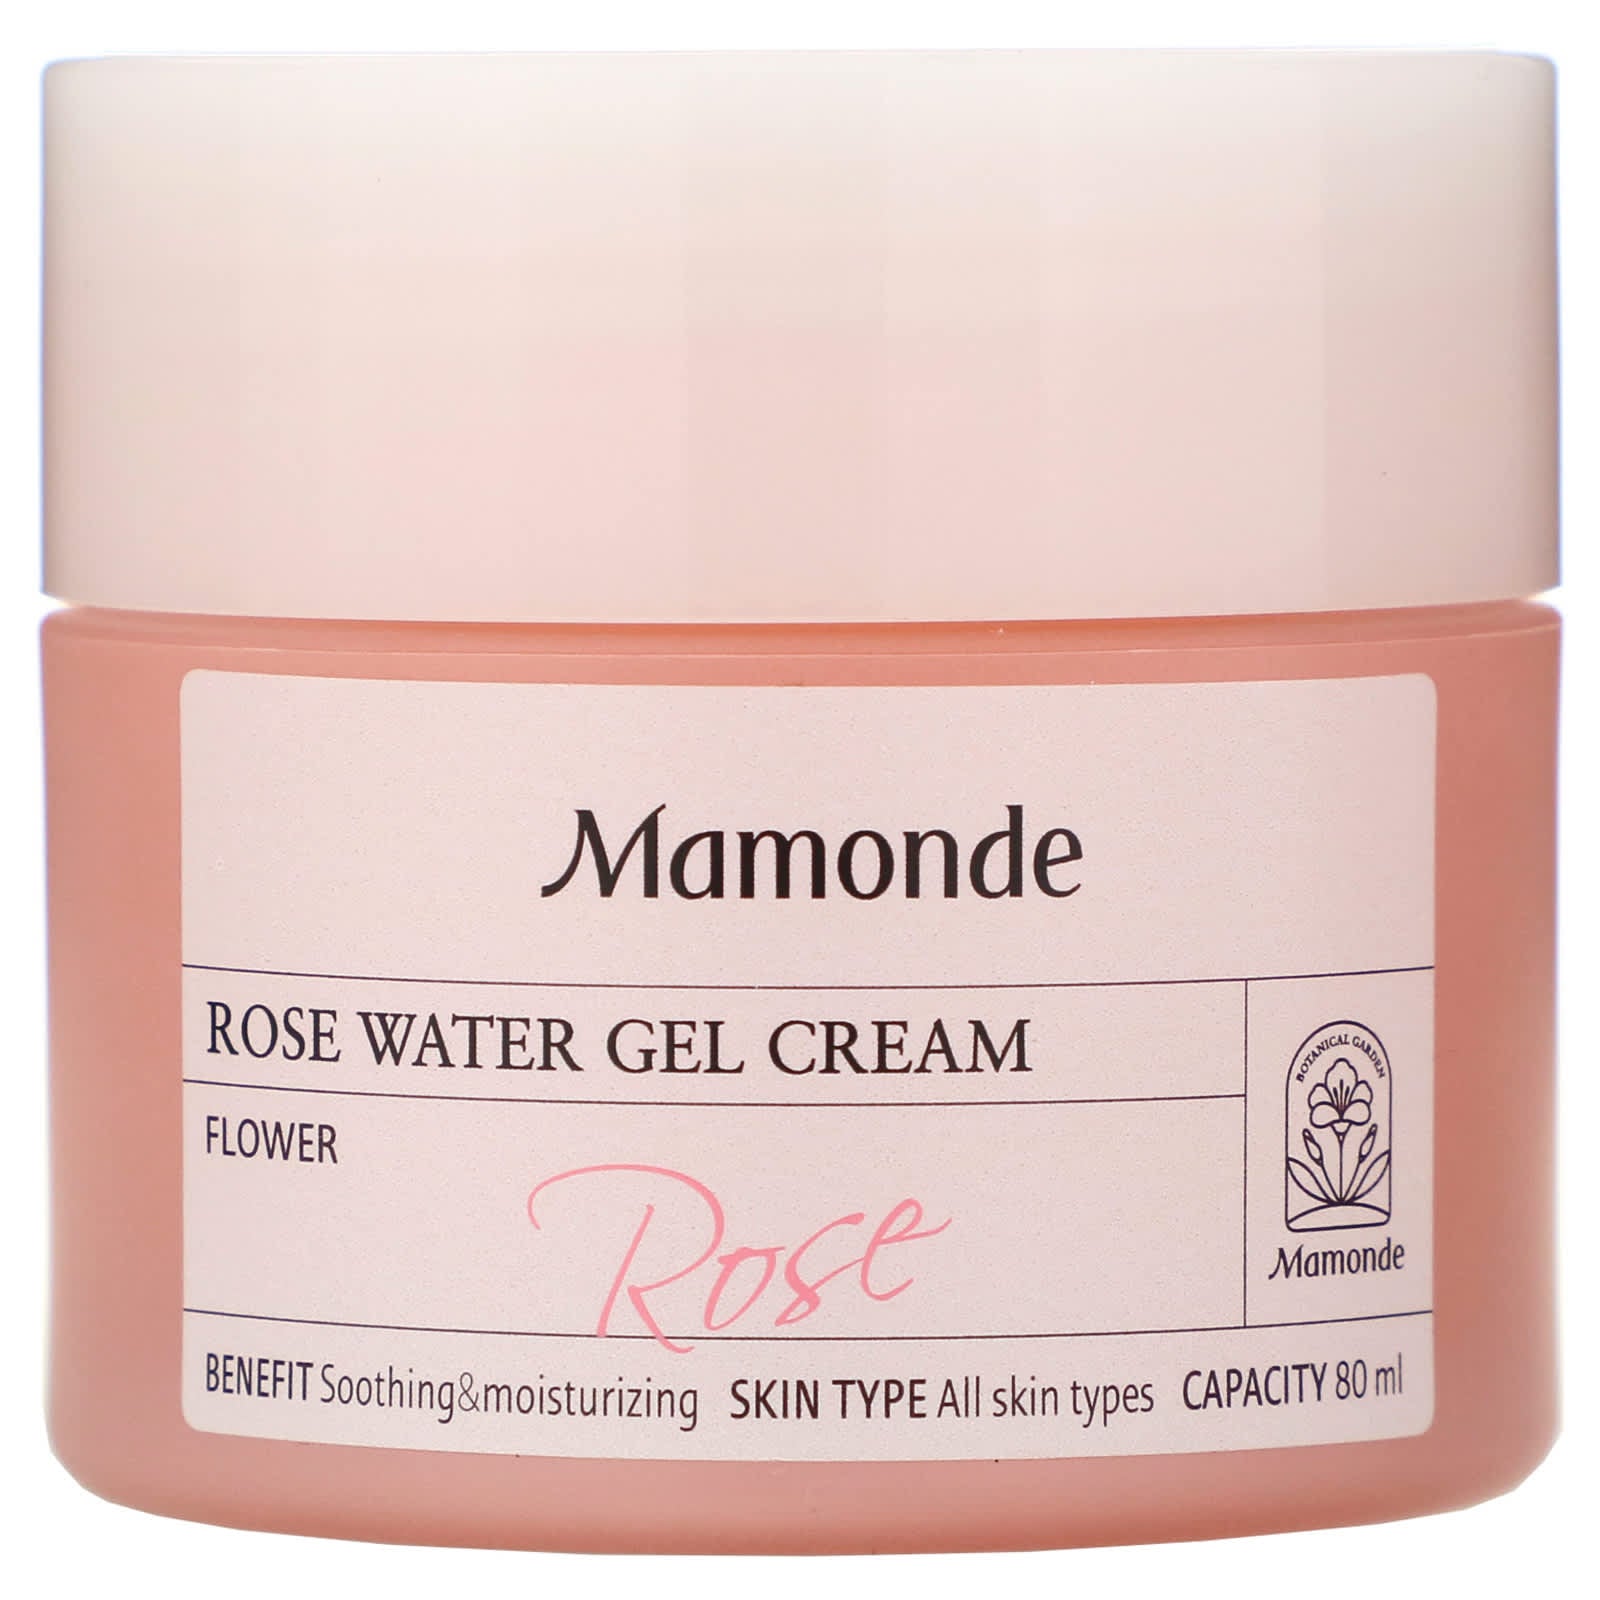 Mamonde, Rose Water Gel Cream